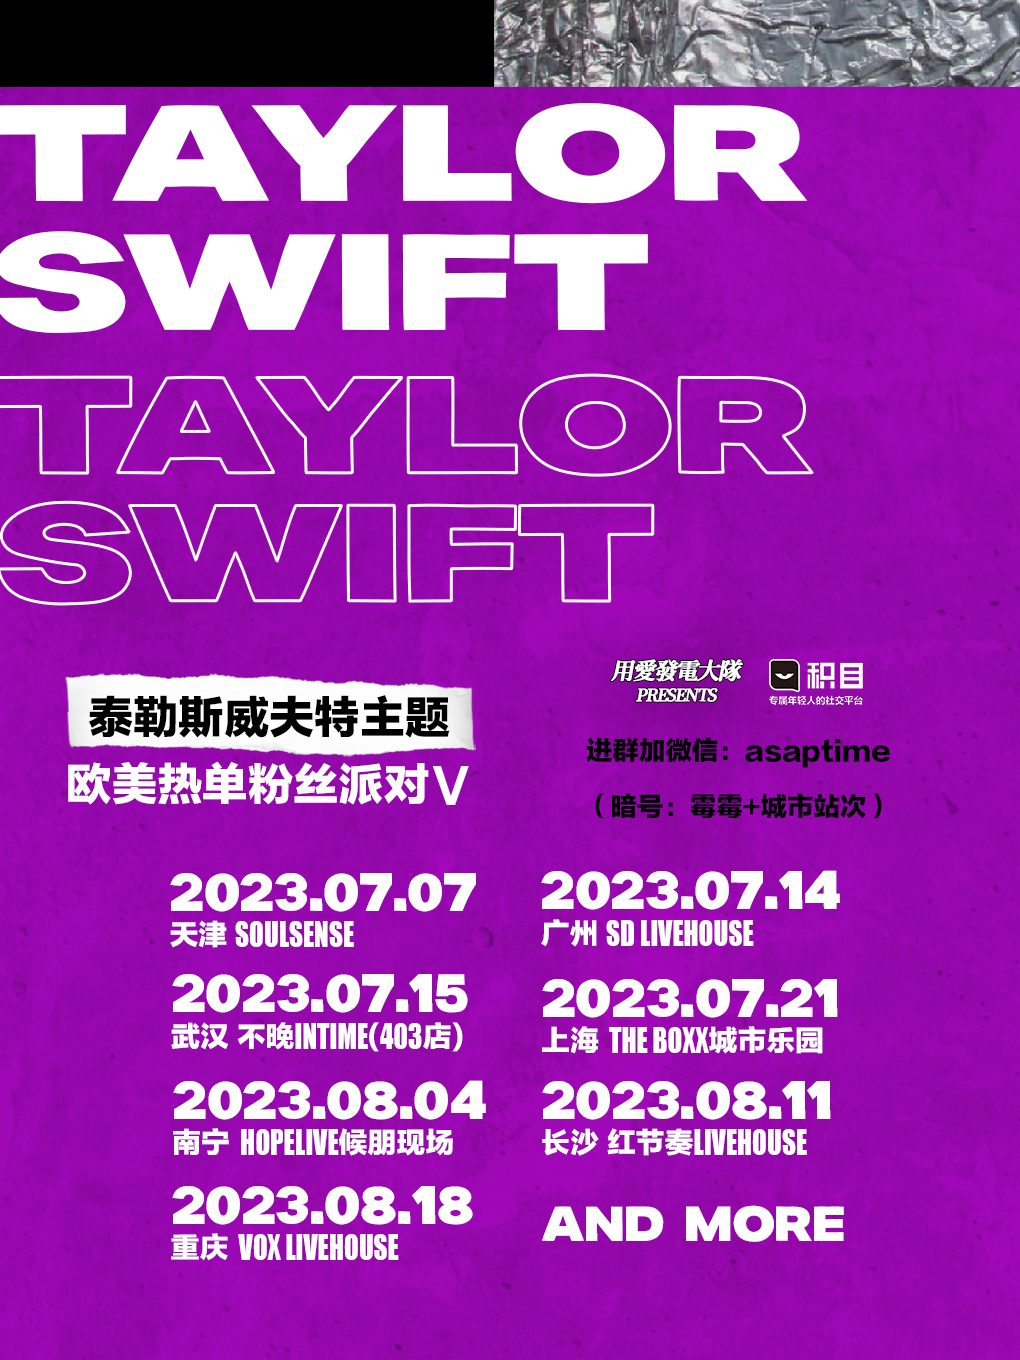 Taylor Swift 主题欧美热单粉丝派对5.0-长沙站@用爱发电大队